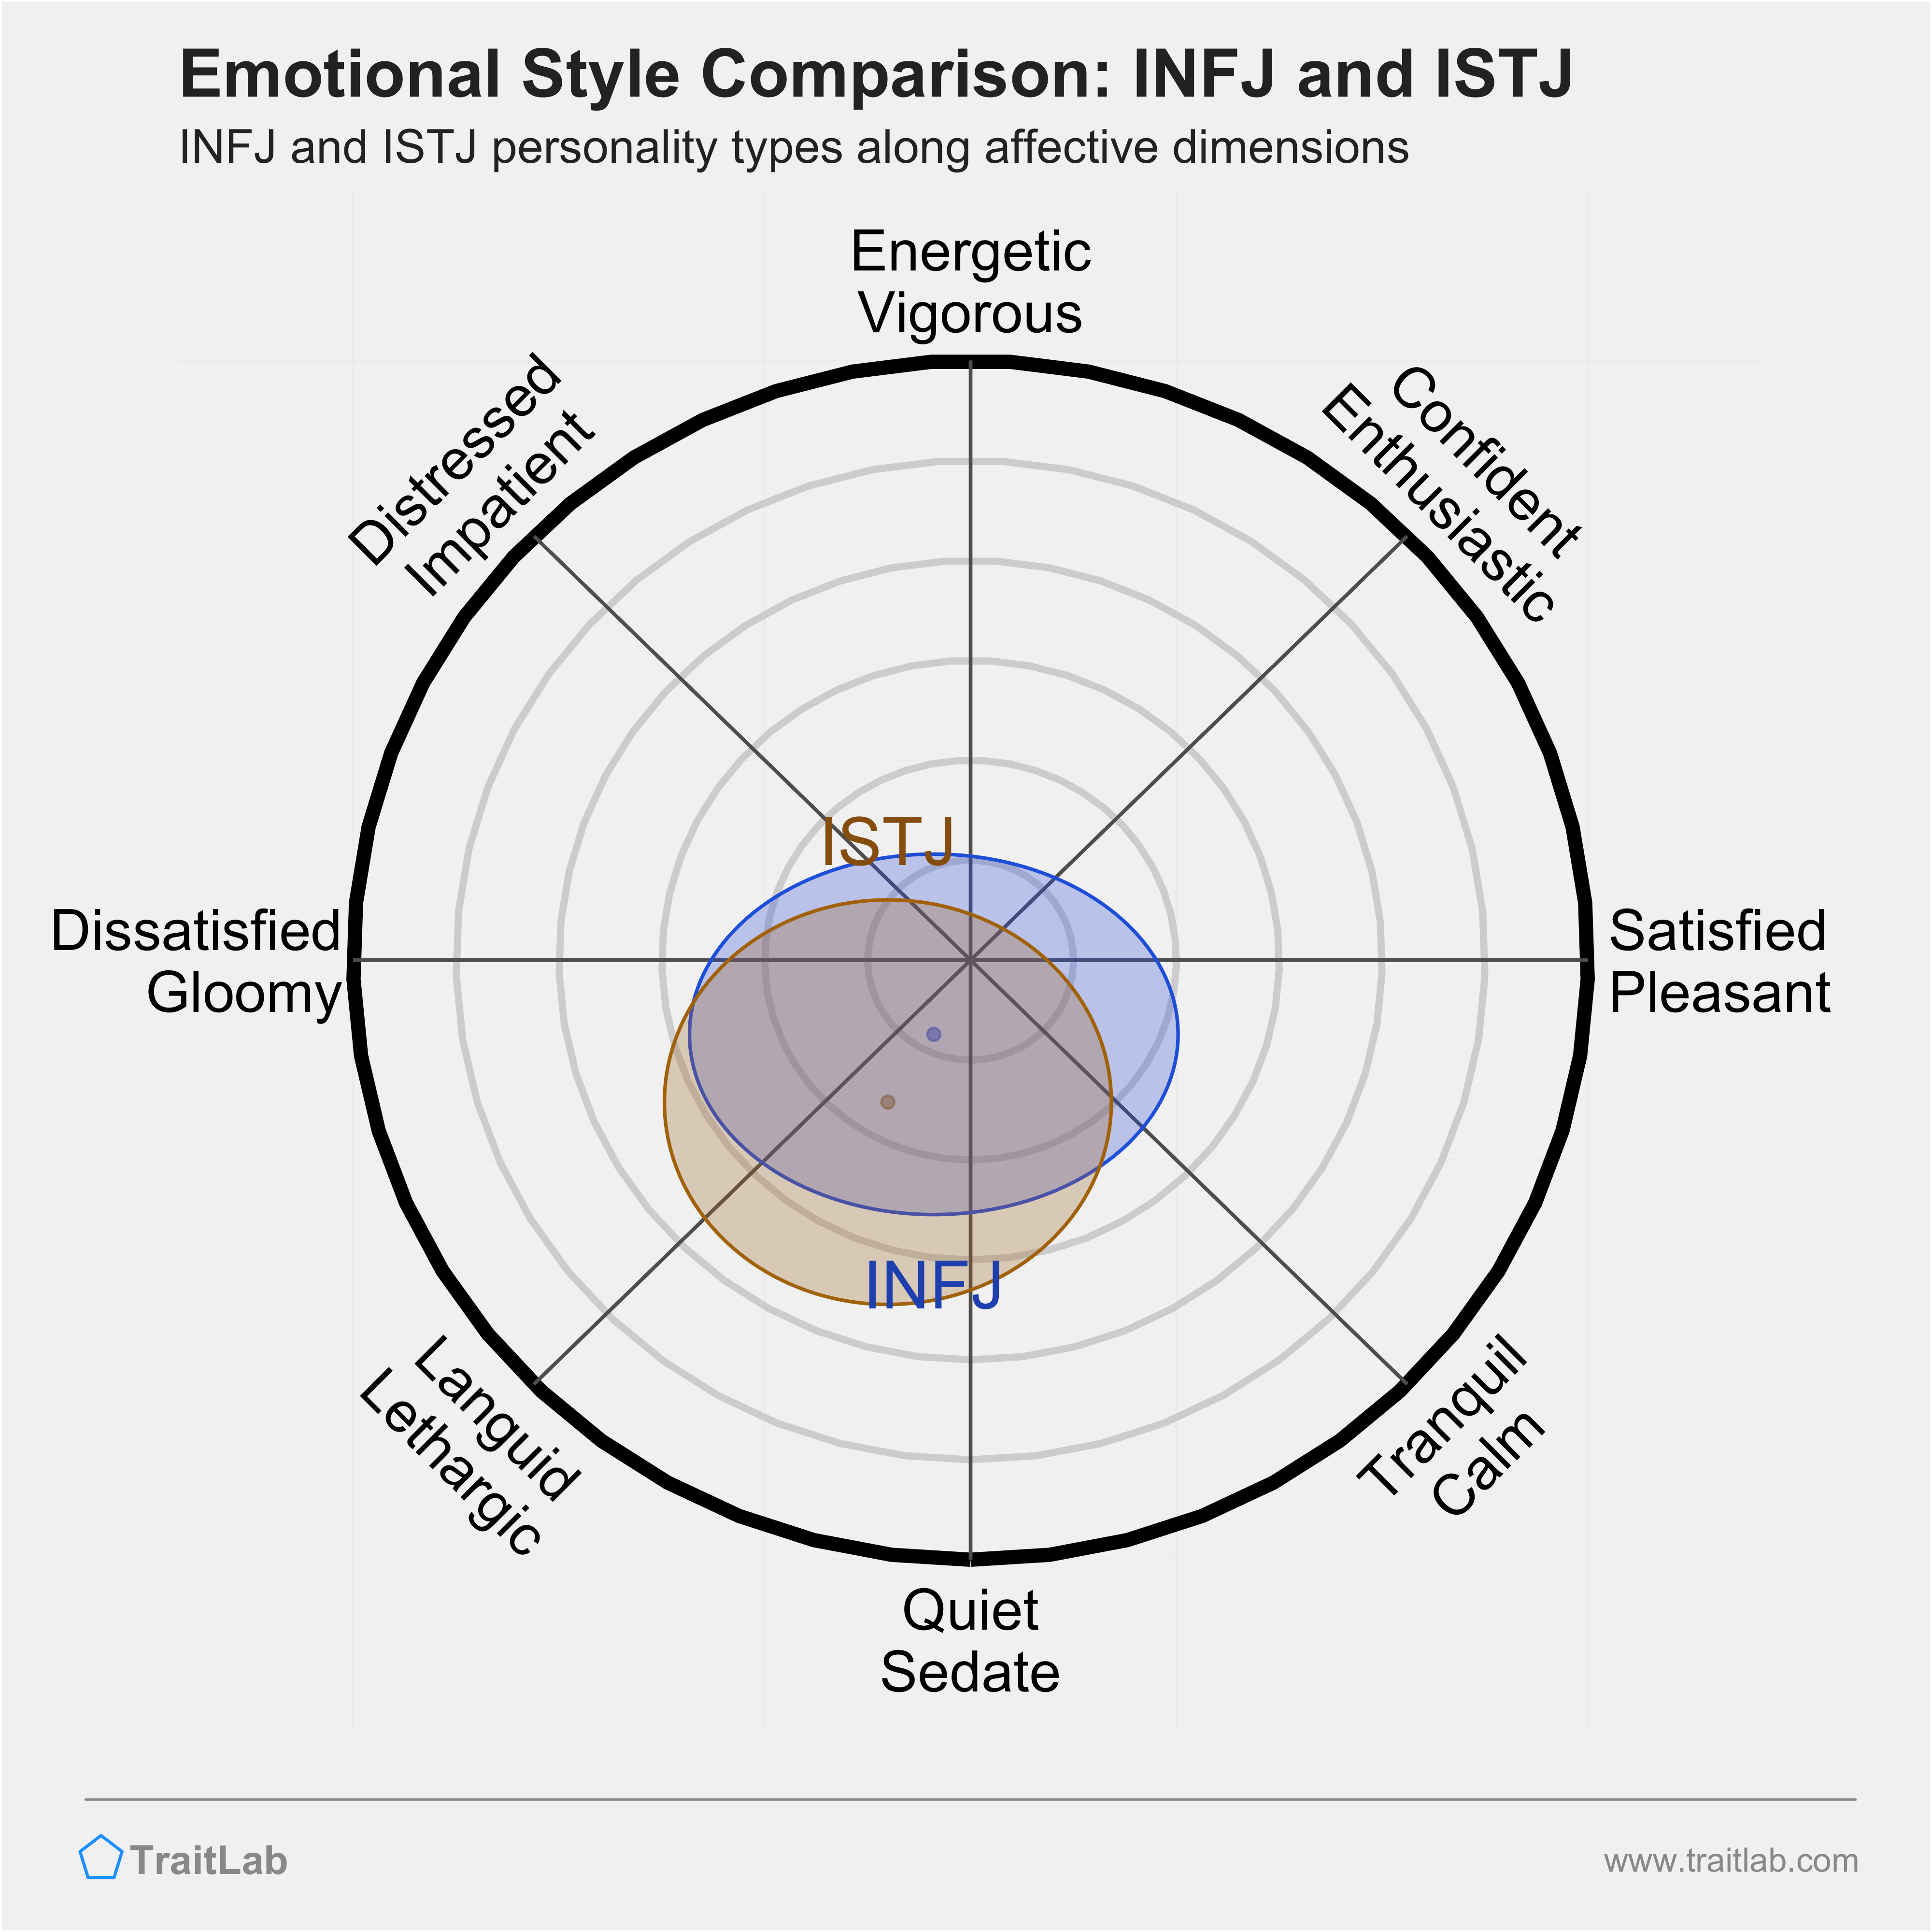 INFJ and ISTJ comparison across emotional (affective) dimensions